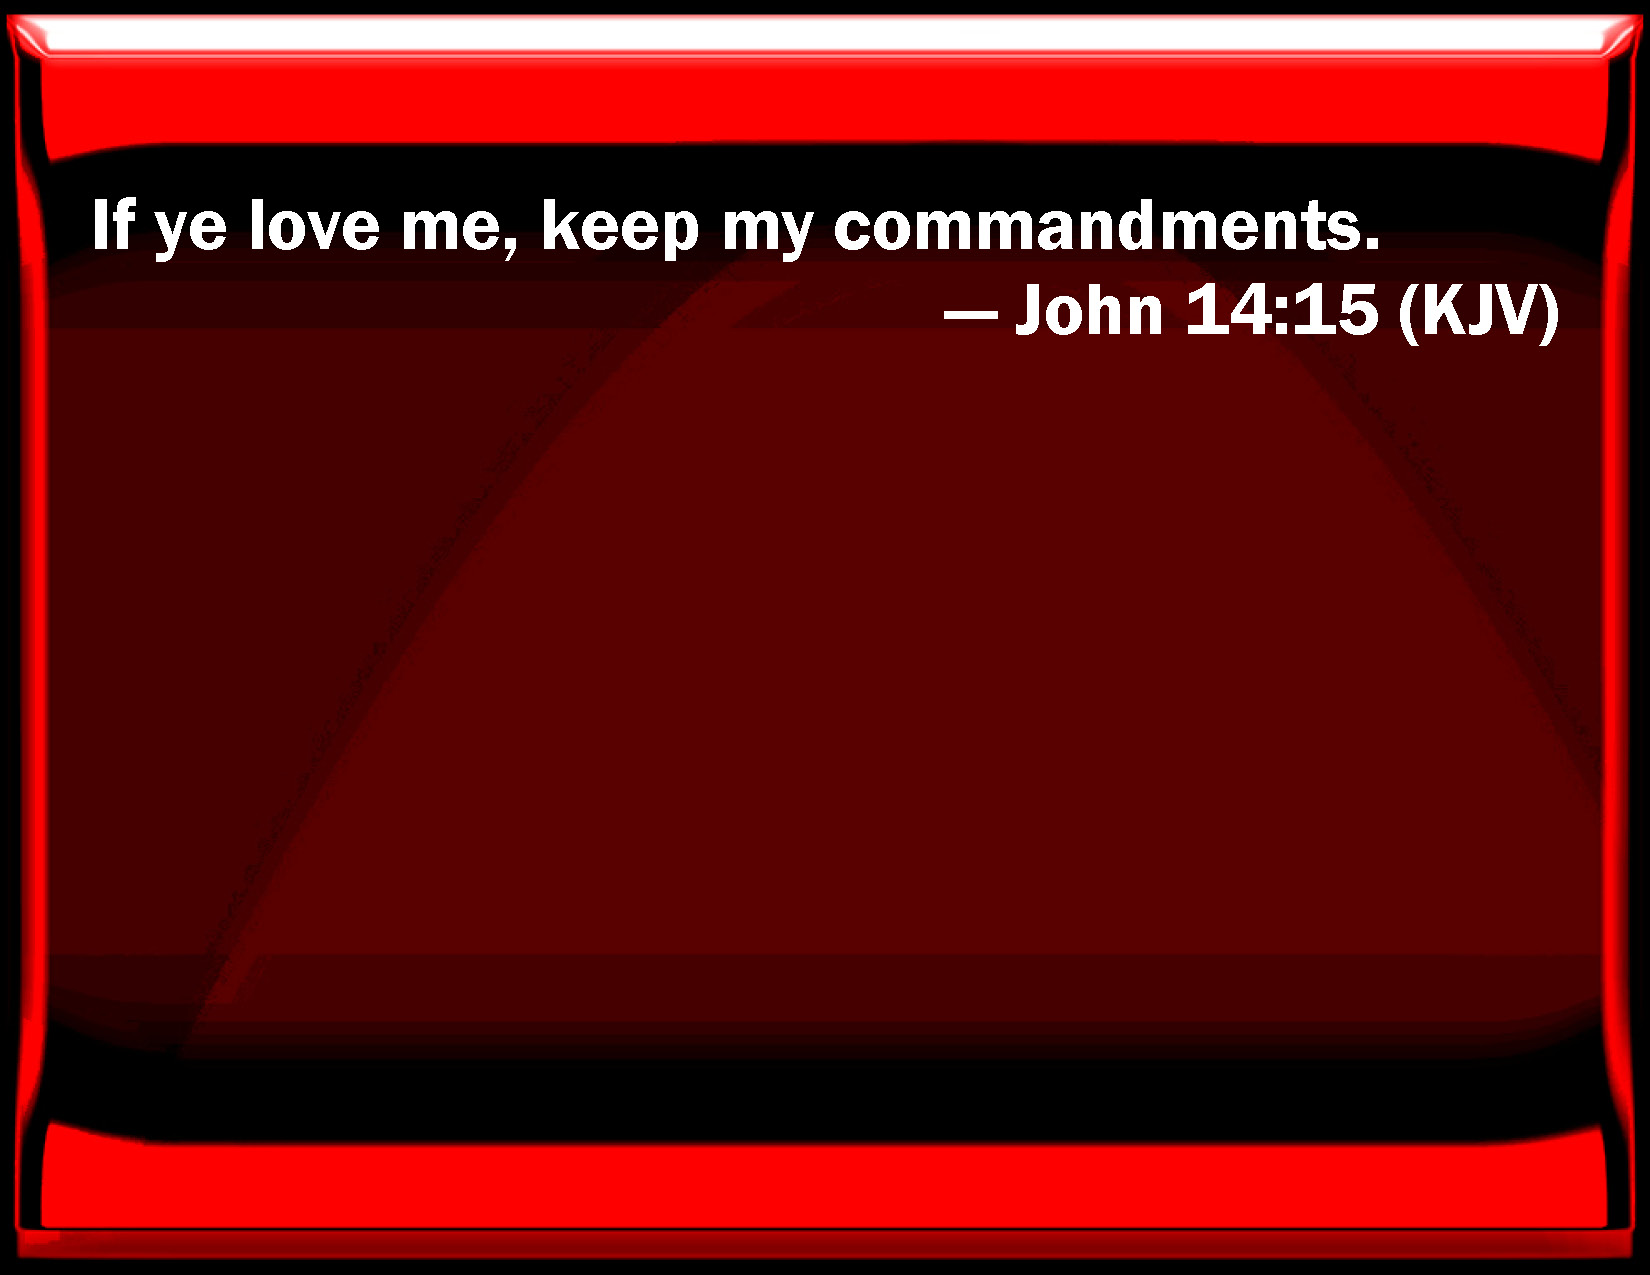 if you love me keep my commandments nkjv